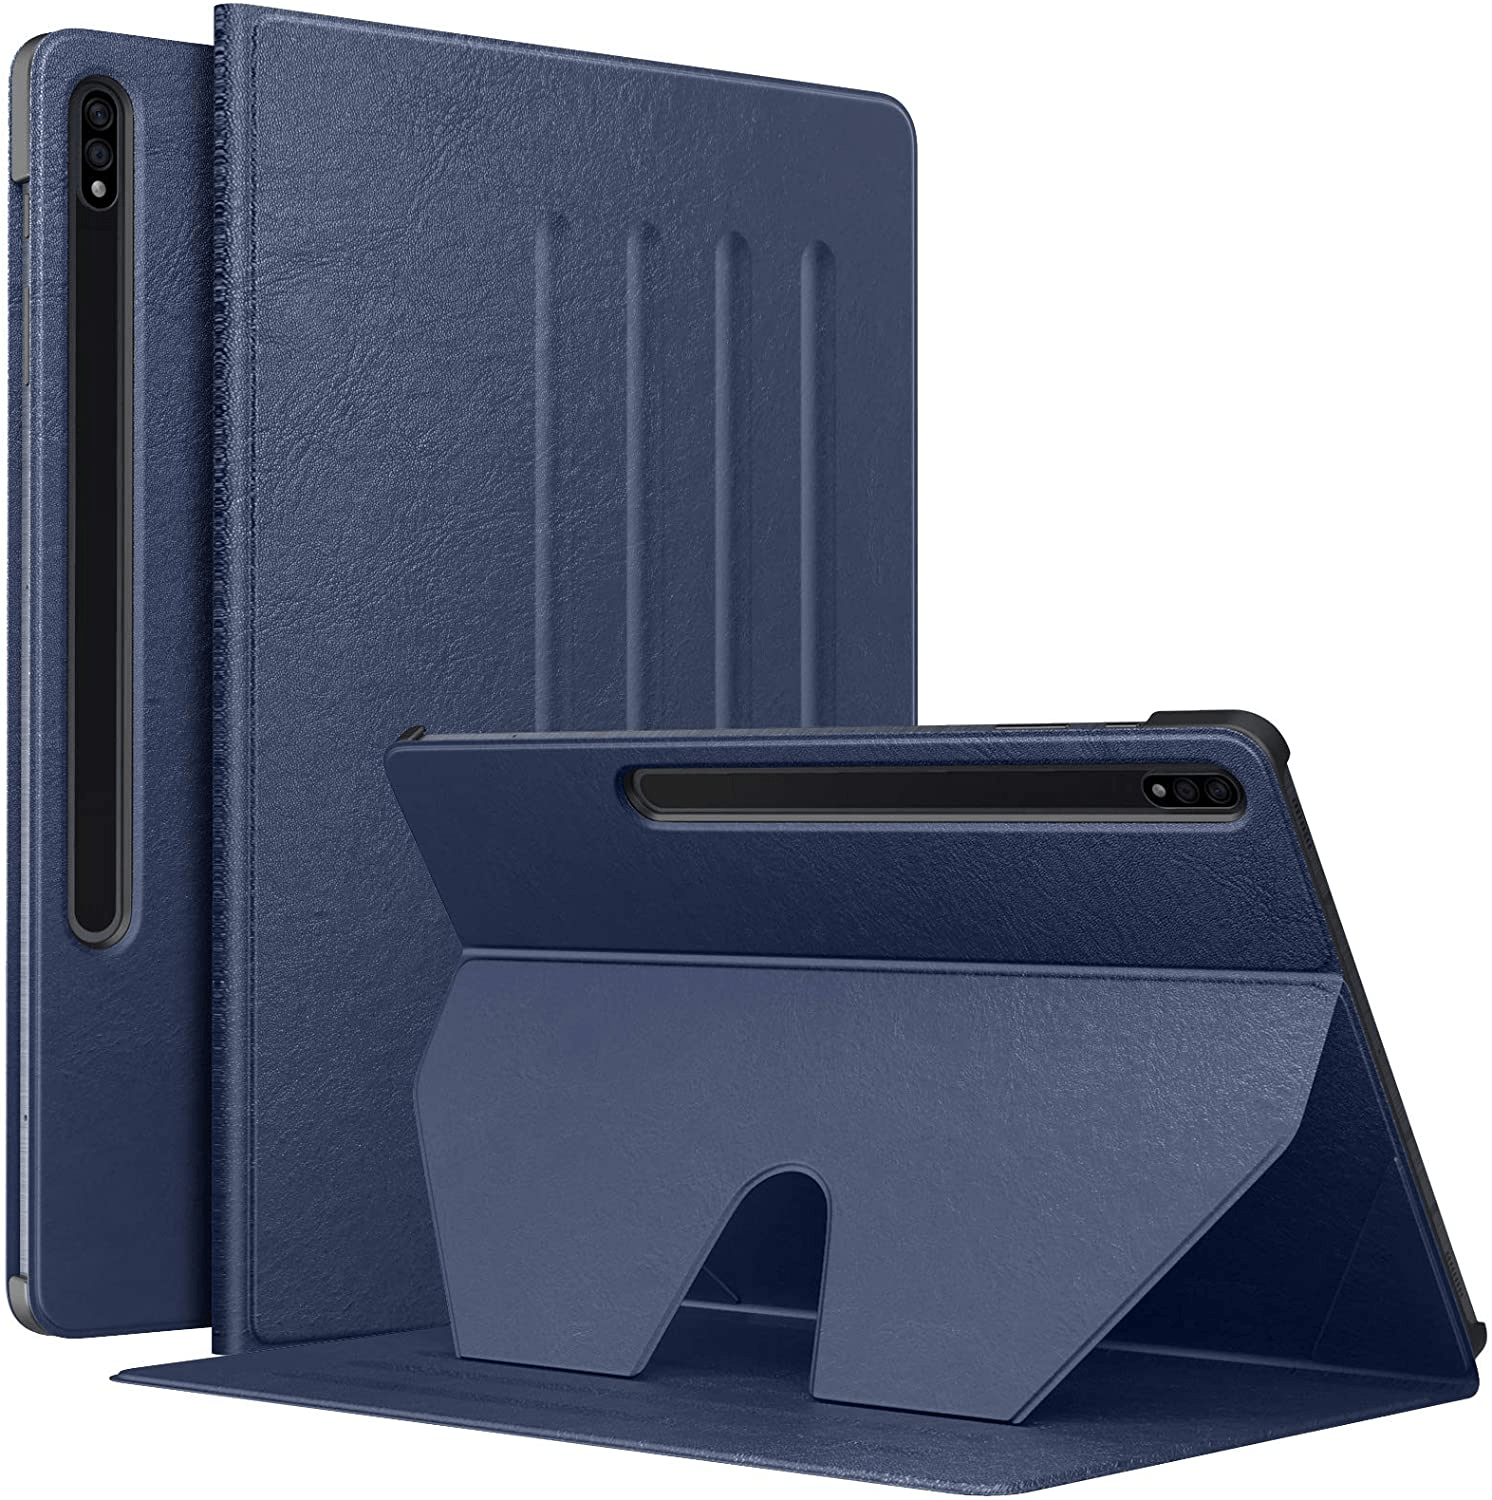 Samsung tablet cases